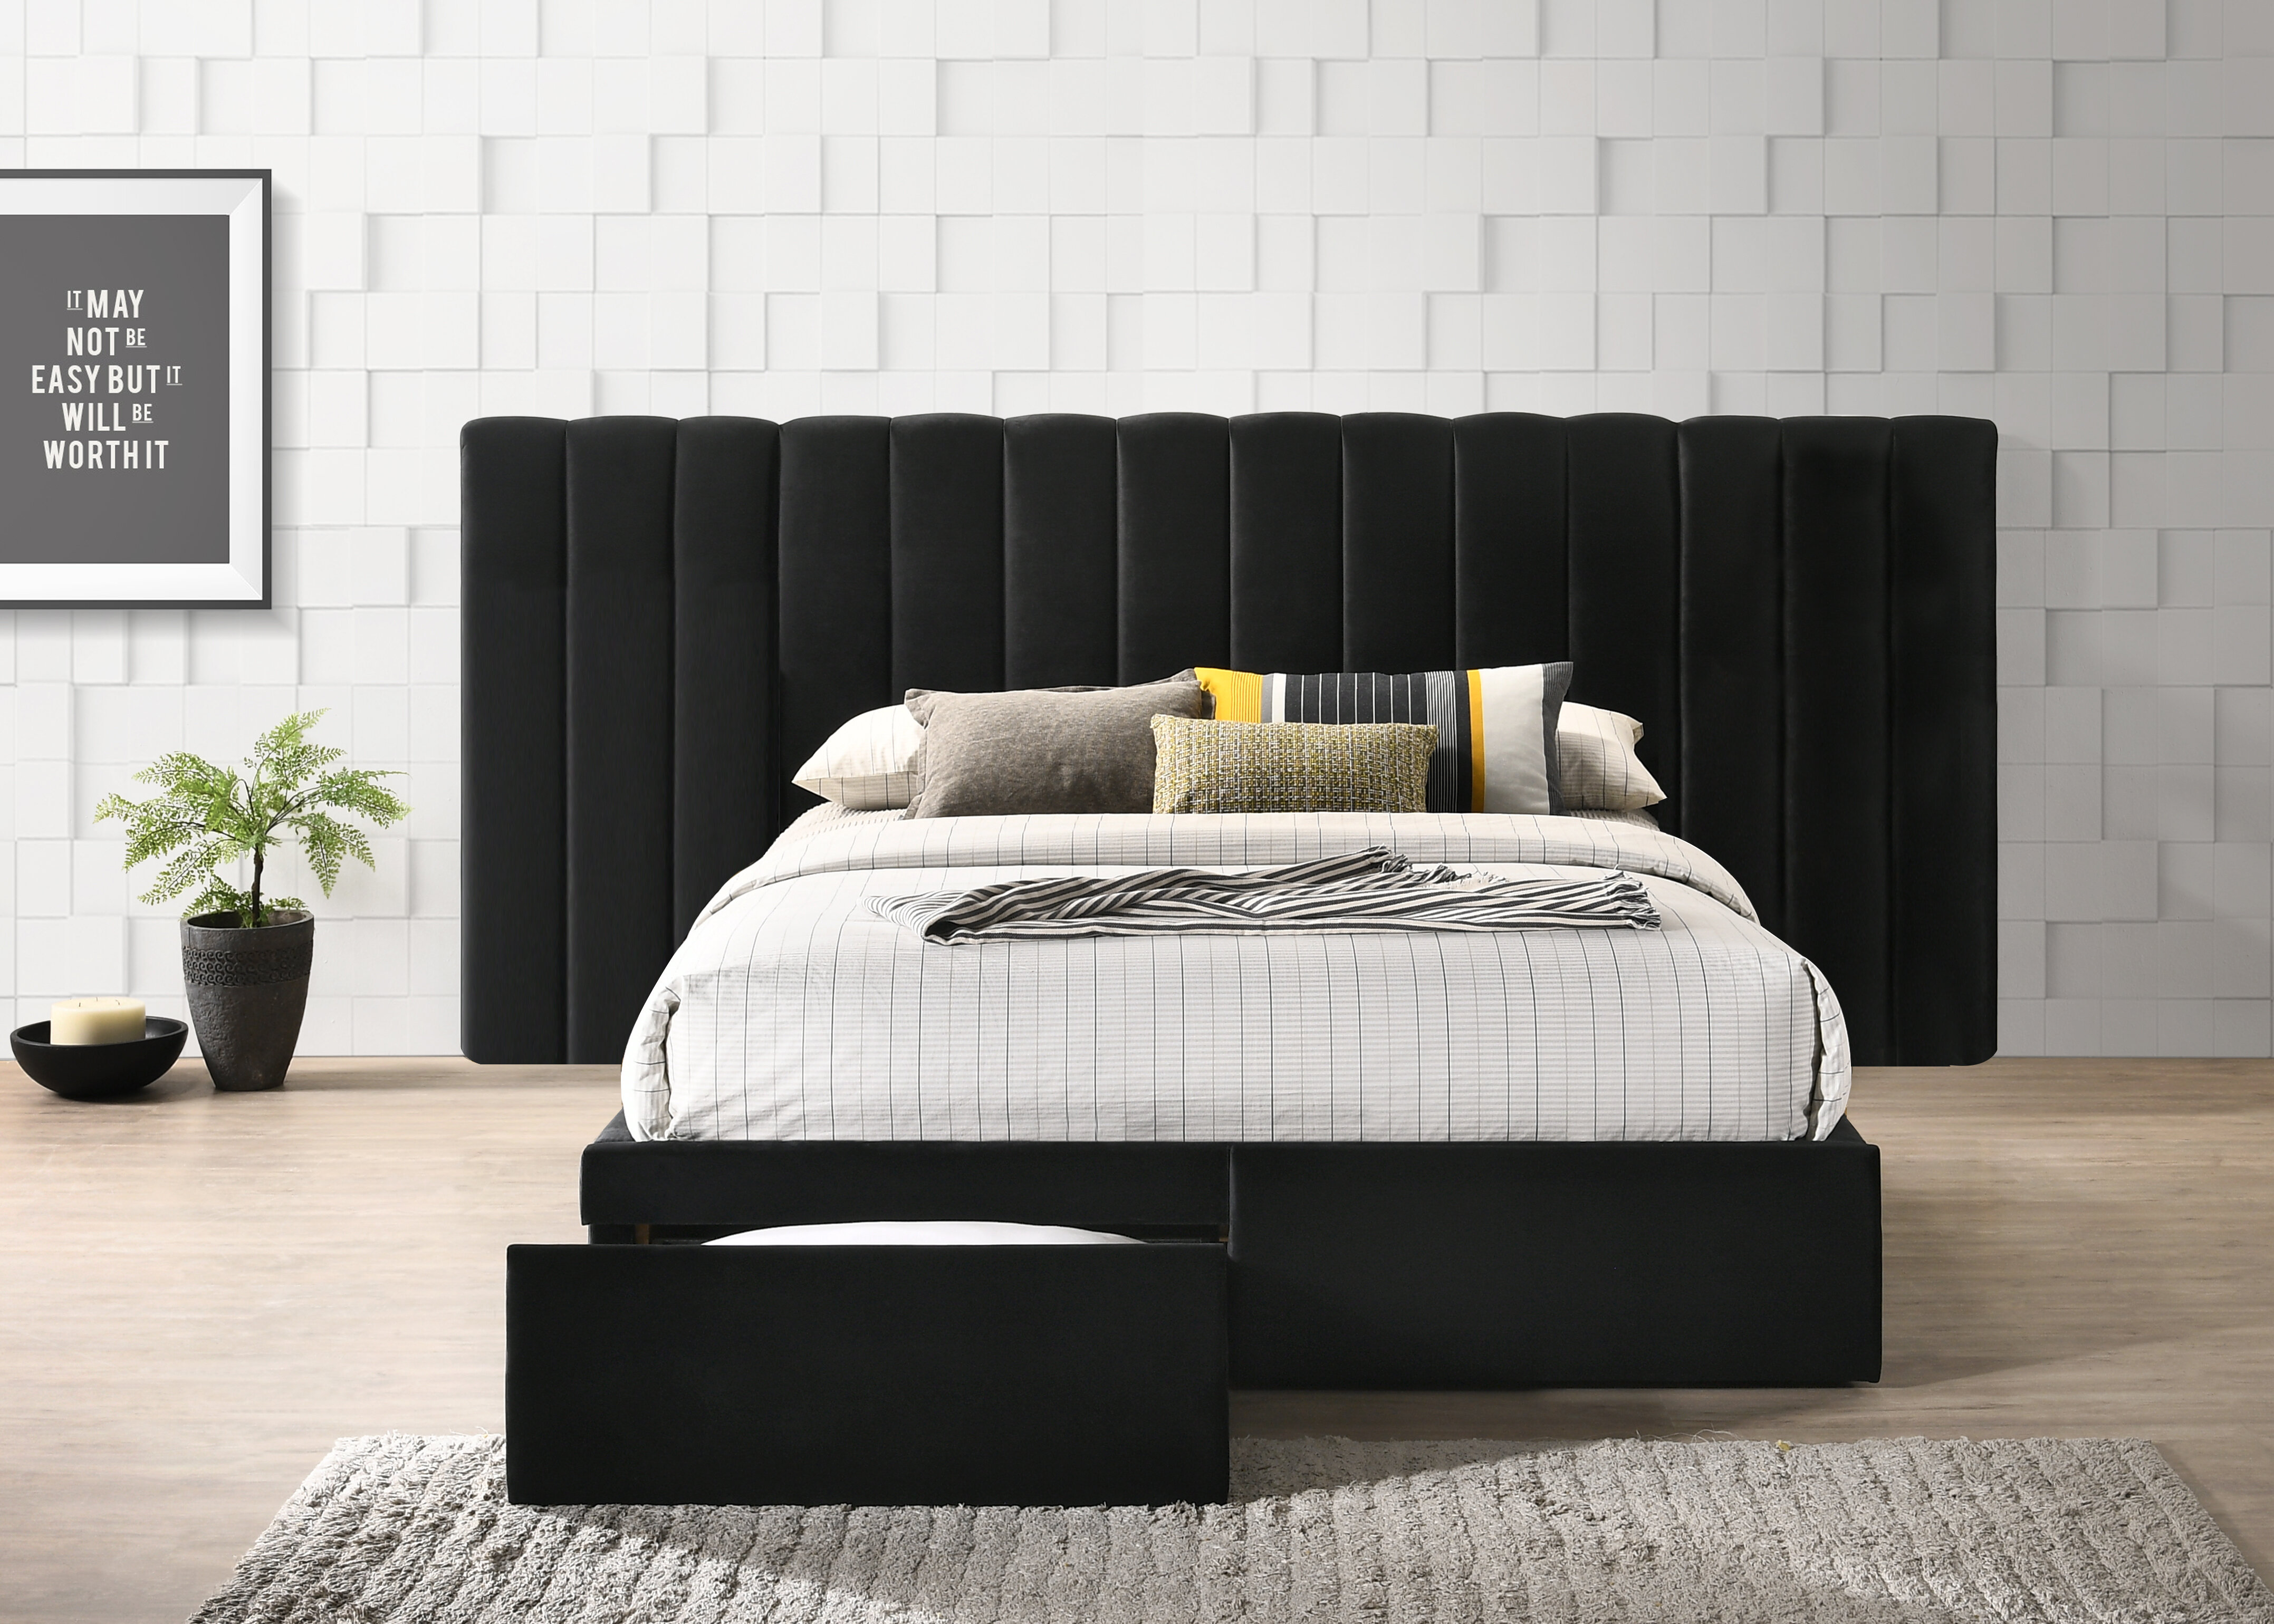 Mercer41 Cassanora Upholstered Storage Bed & Reviews | Wayfair